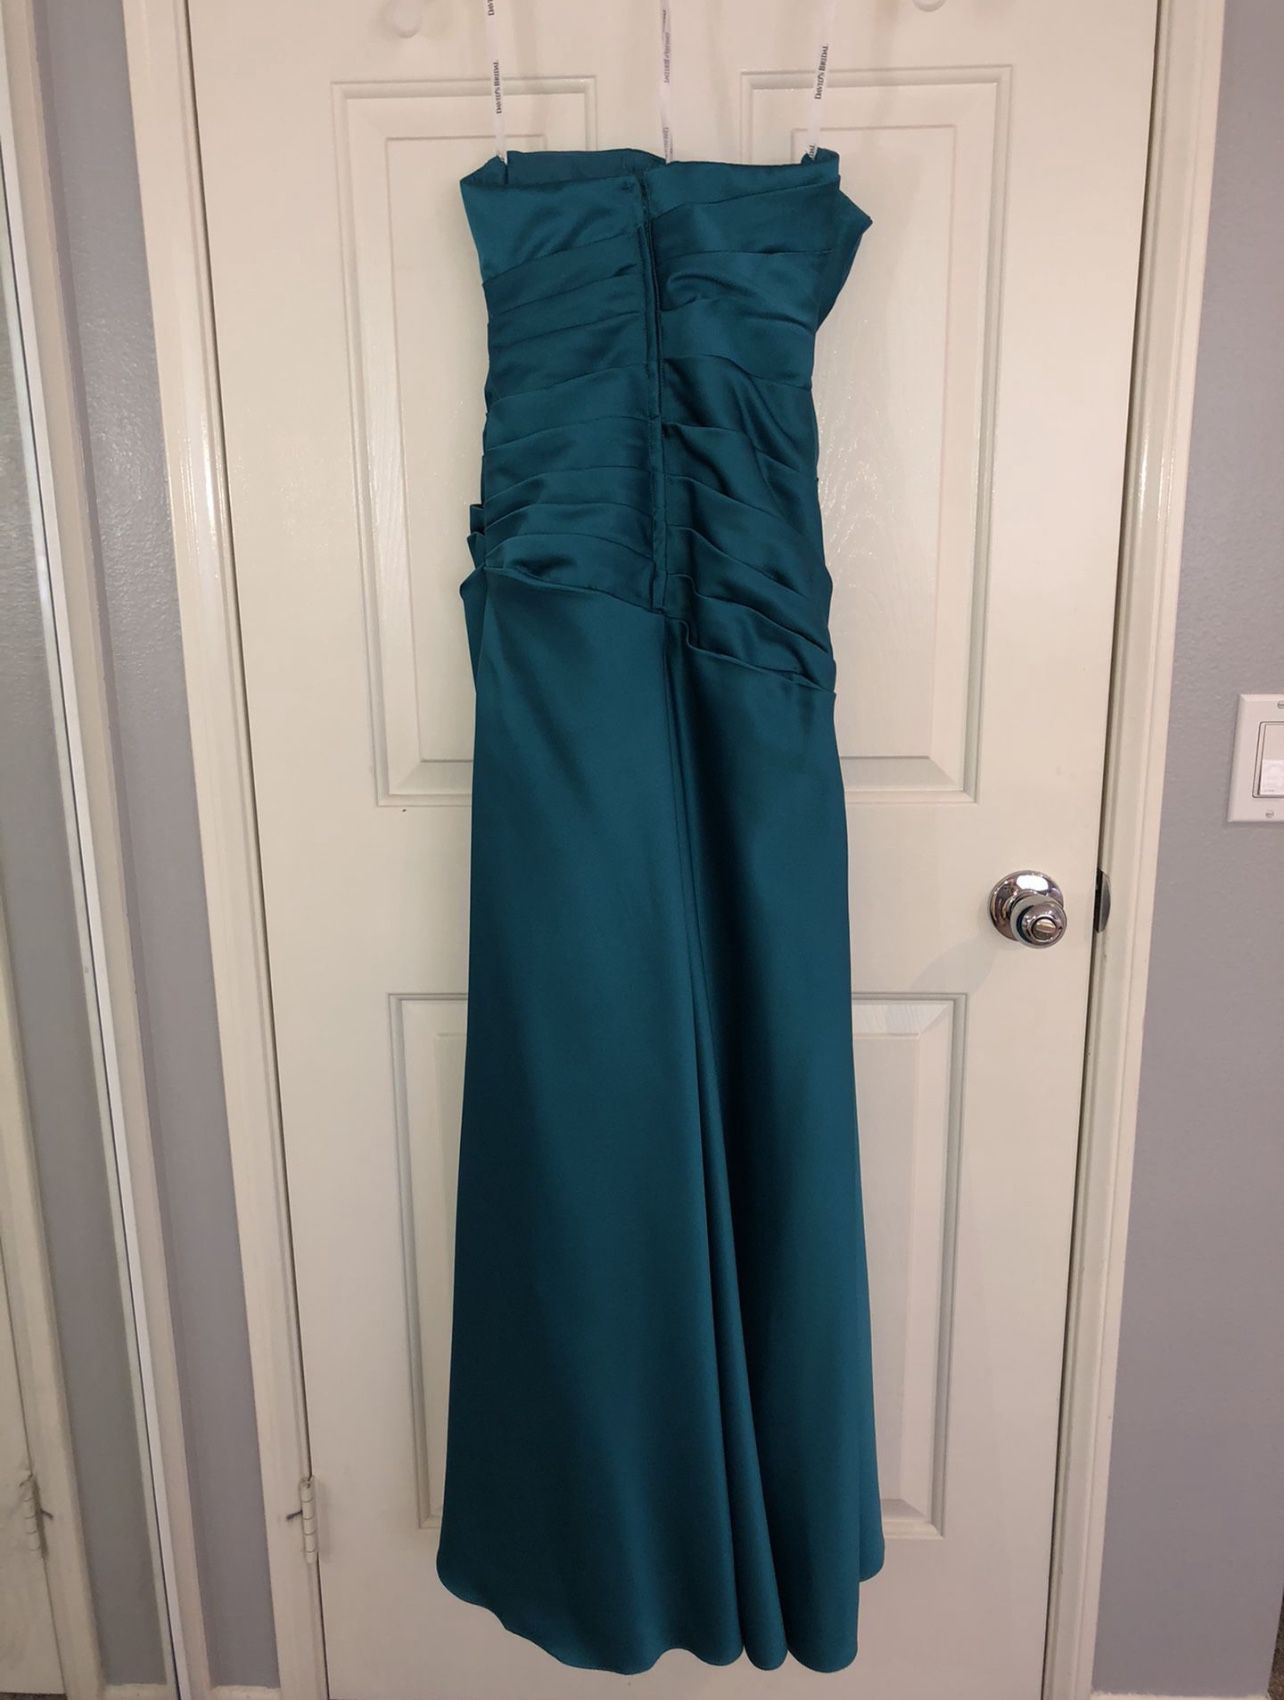 David’s Bridal Bridesmaid Strapless Wedding Dress - Teal Green - Size 2 